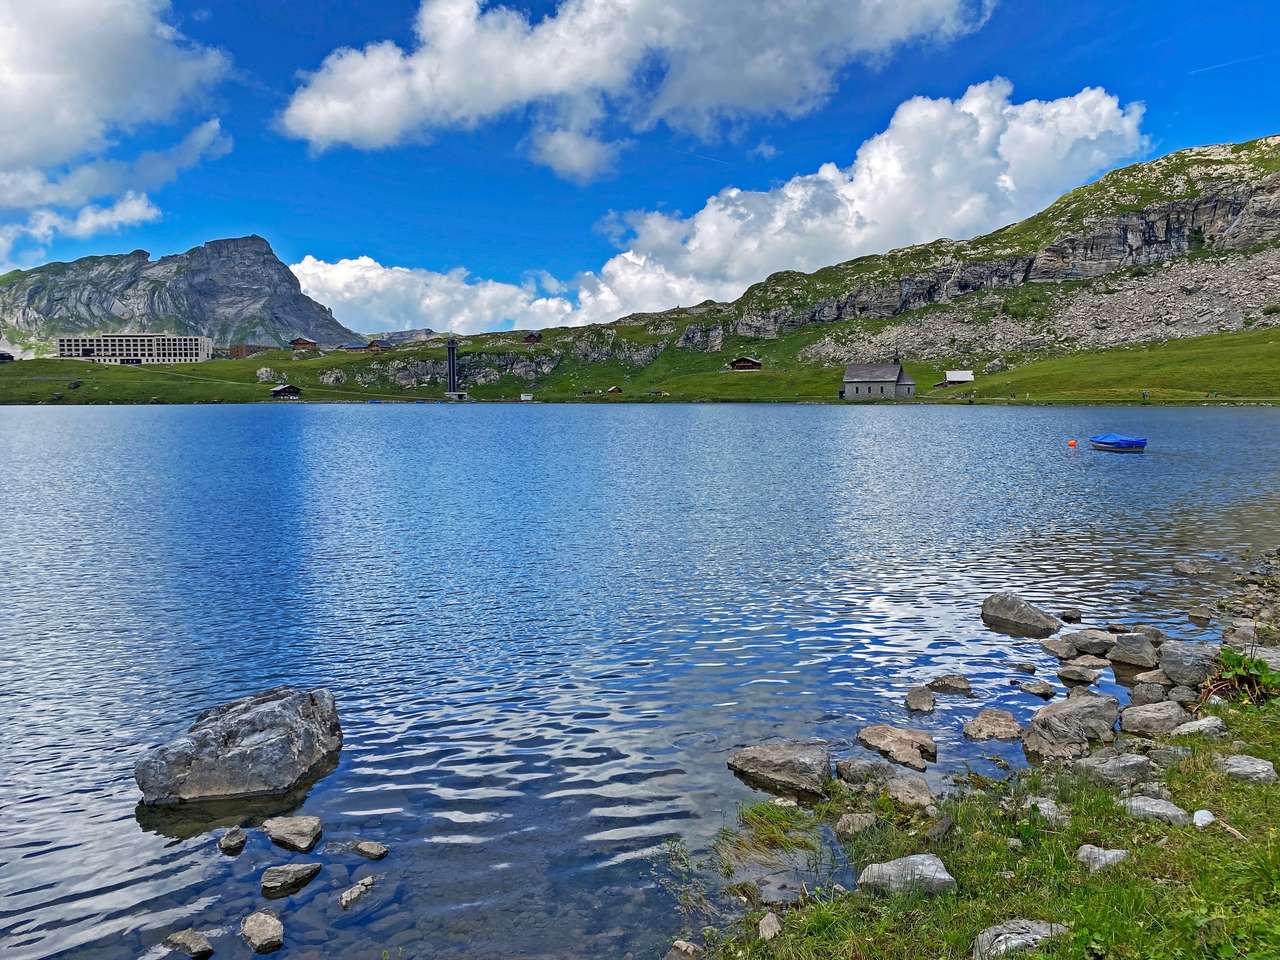 O lago alpino Melchsee puzzle online a partir de fotografia